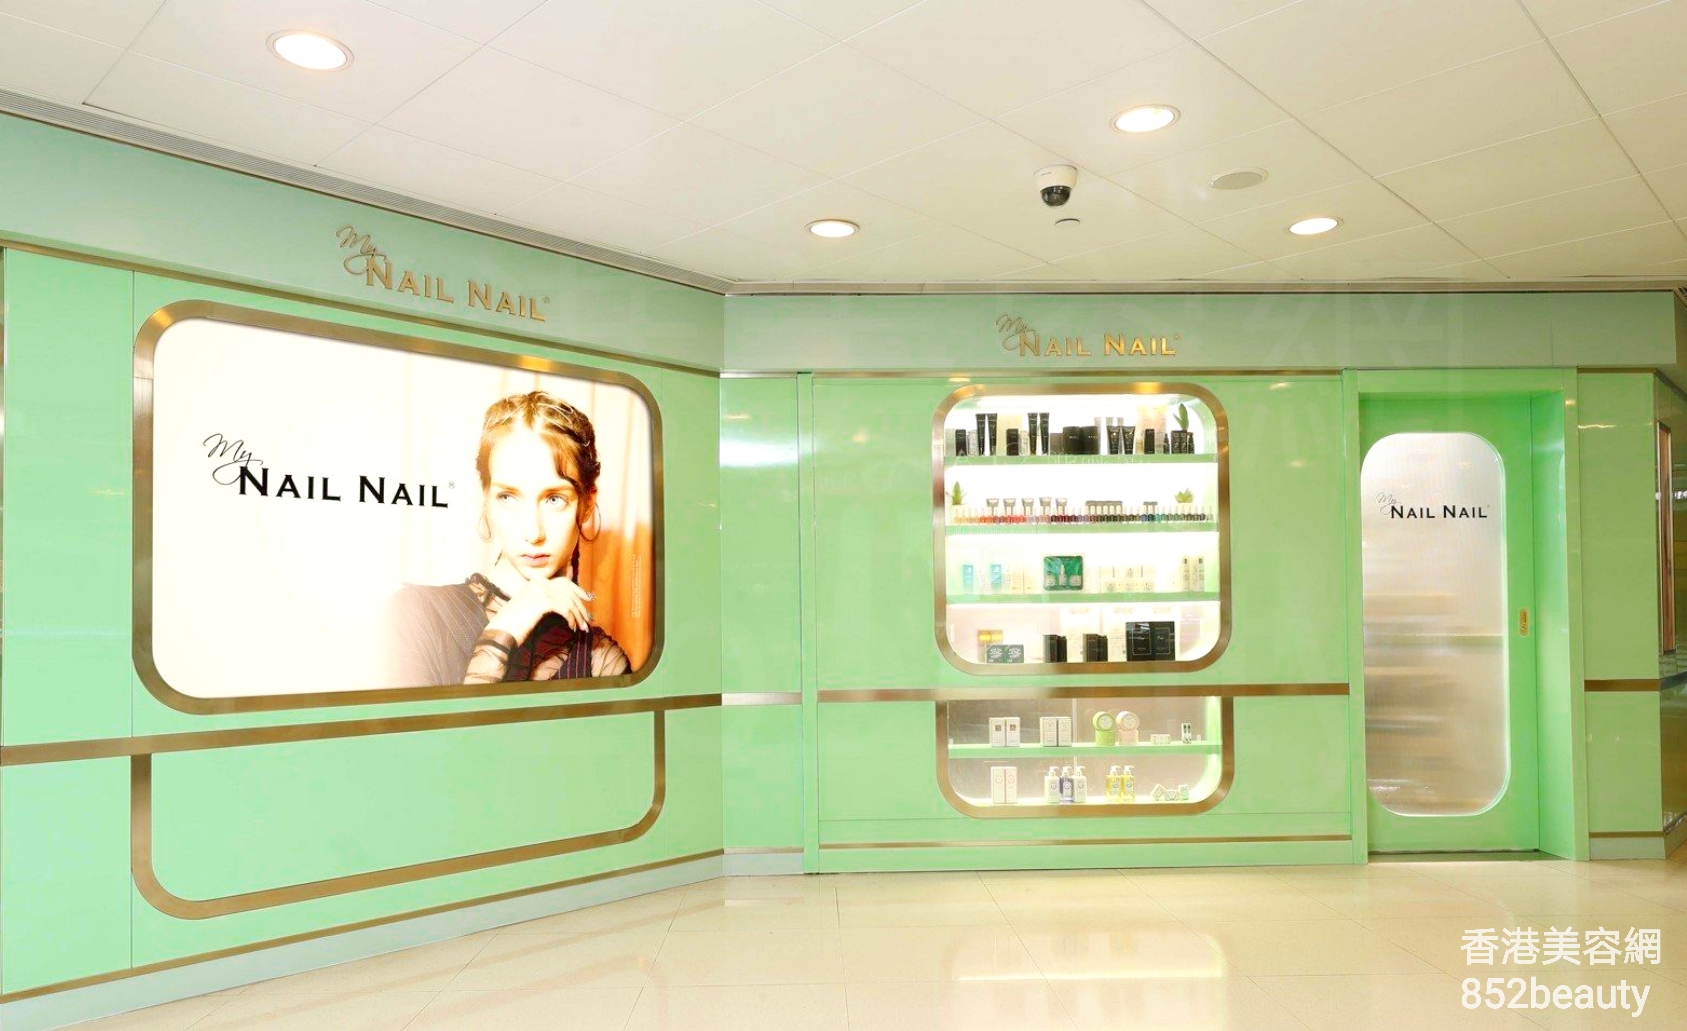 香港美容網 Hong Kong Beauty Salon 美容院 / 美容師: Nail Nail (Central building)